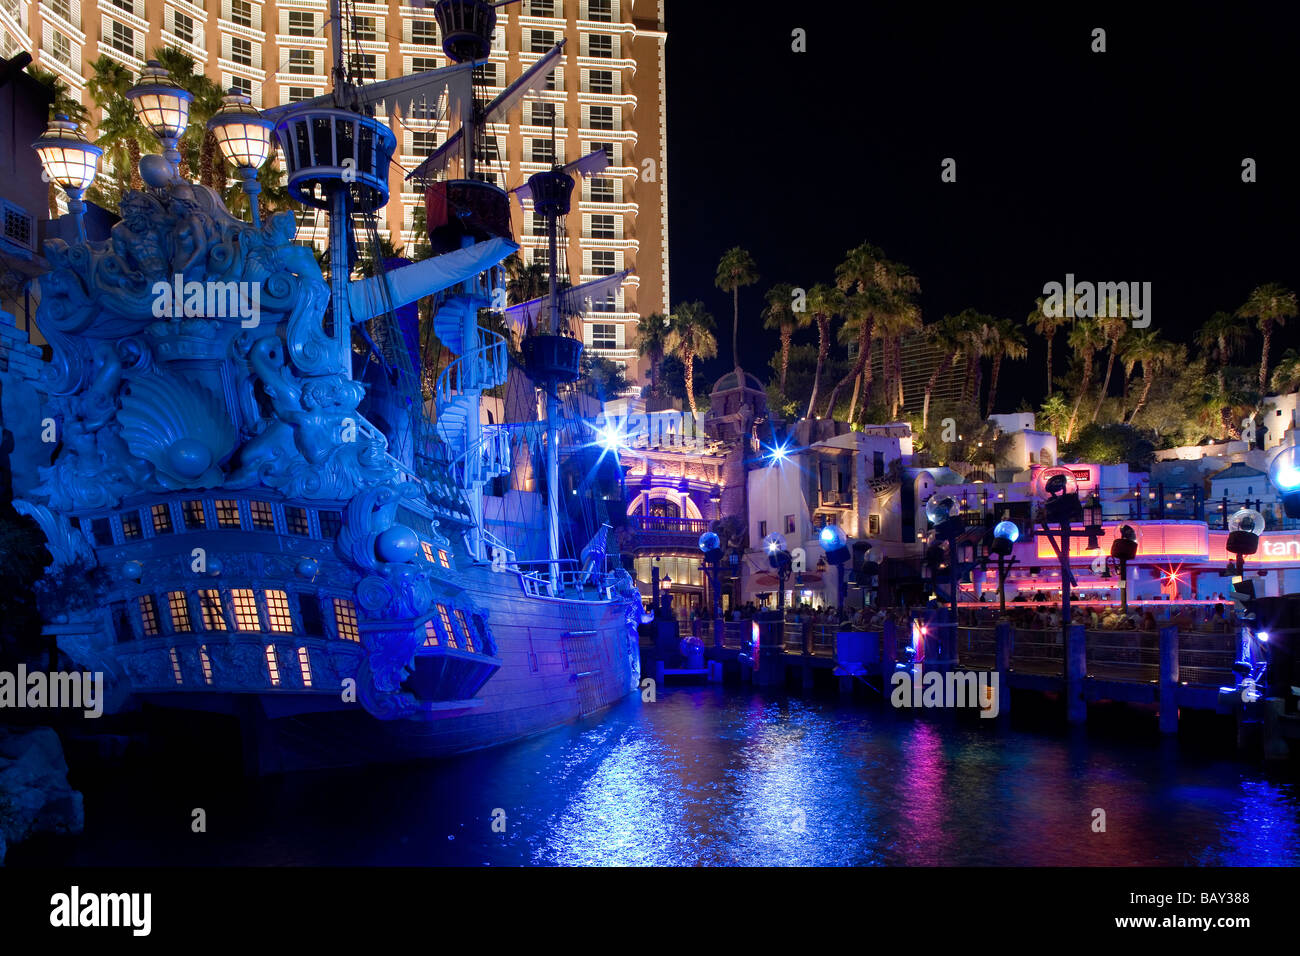 A pirate ship illuminated outside the Treasure Island Hotel and Casino in Las Vegas, Nevada, USA Stock Photo